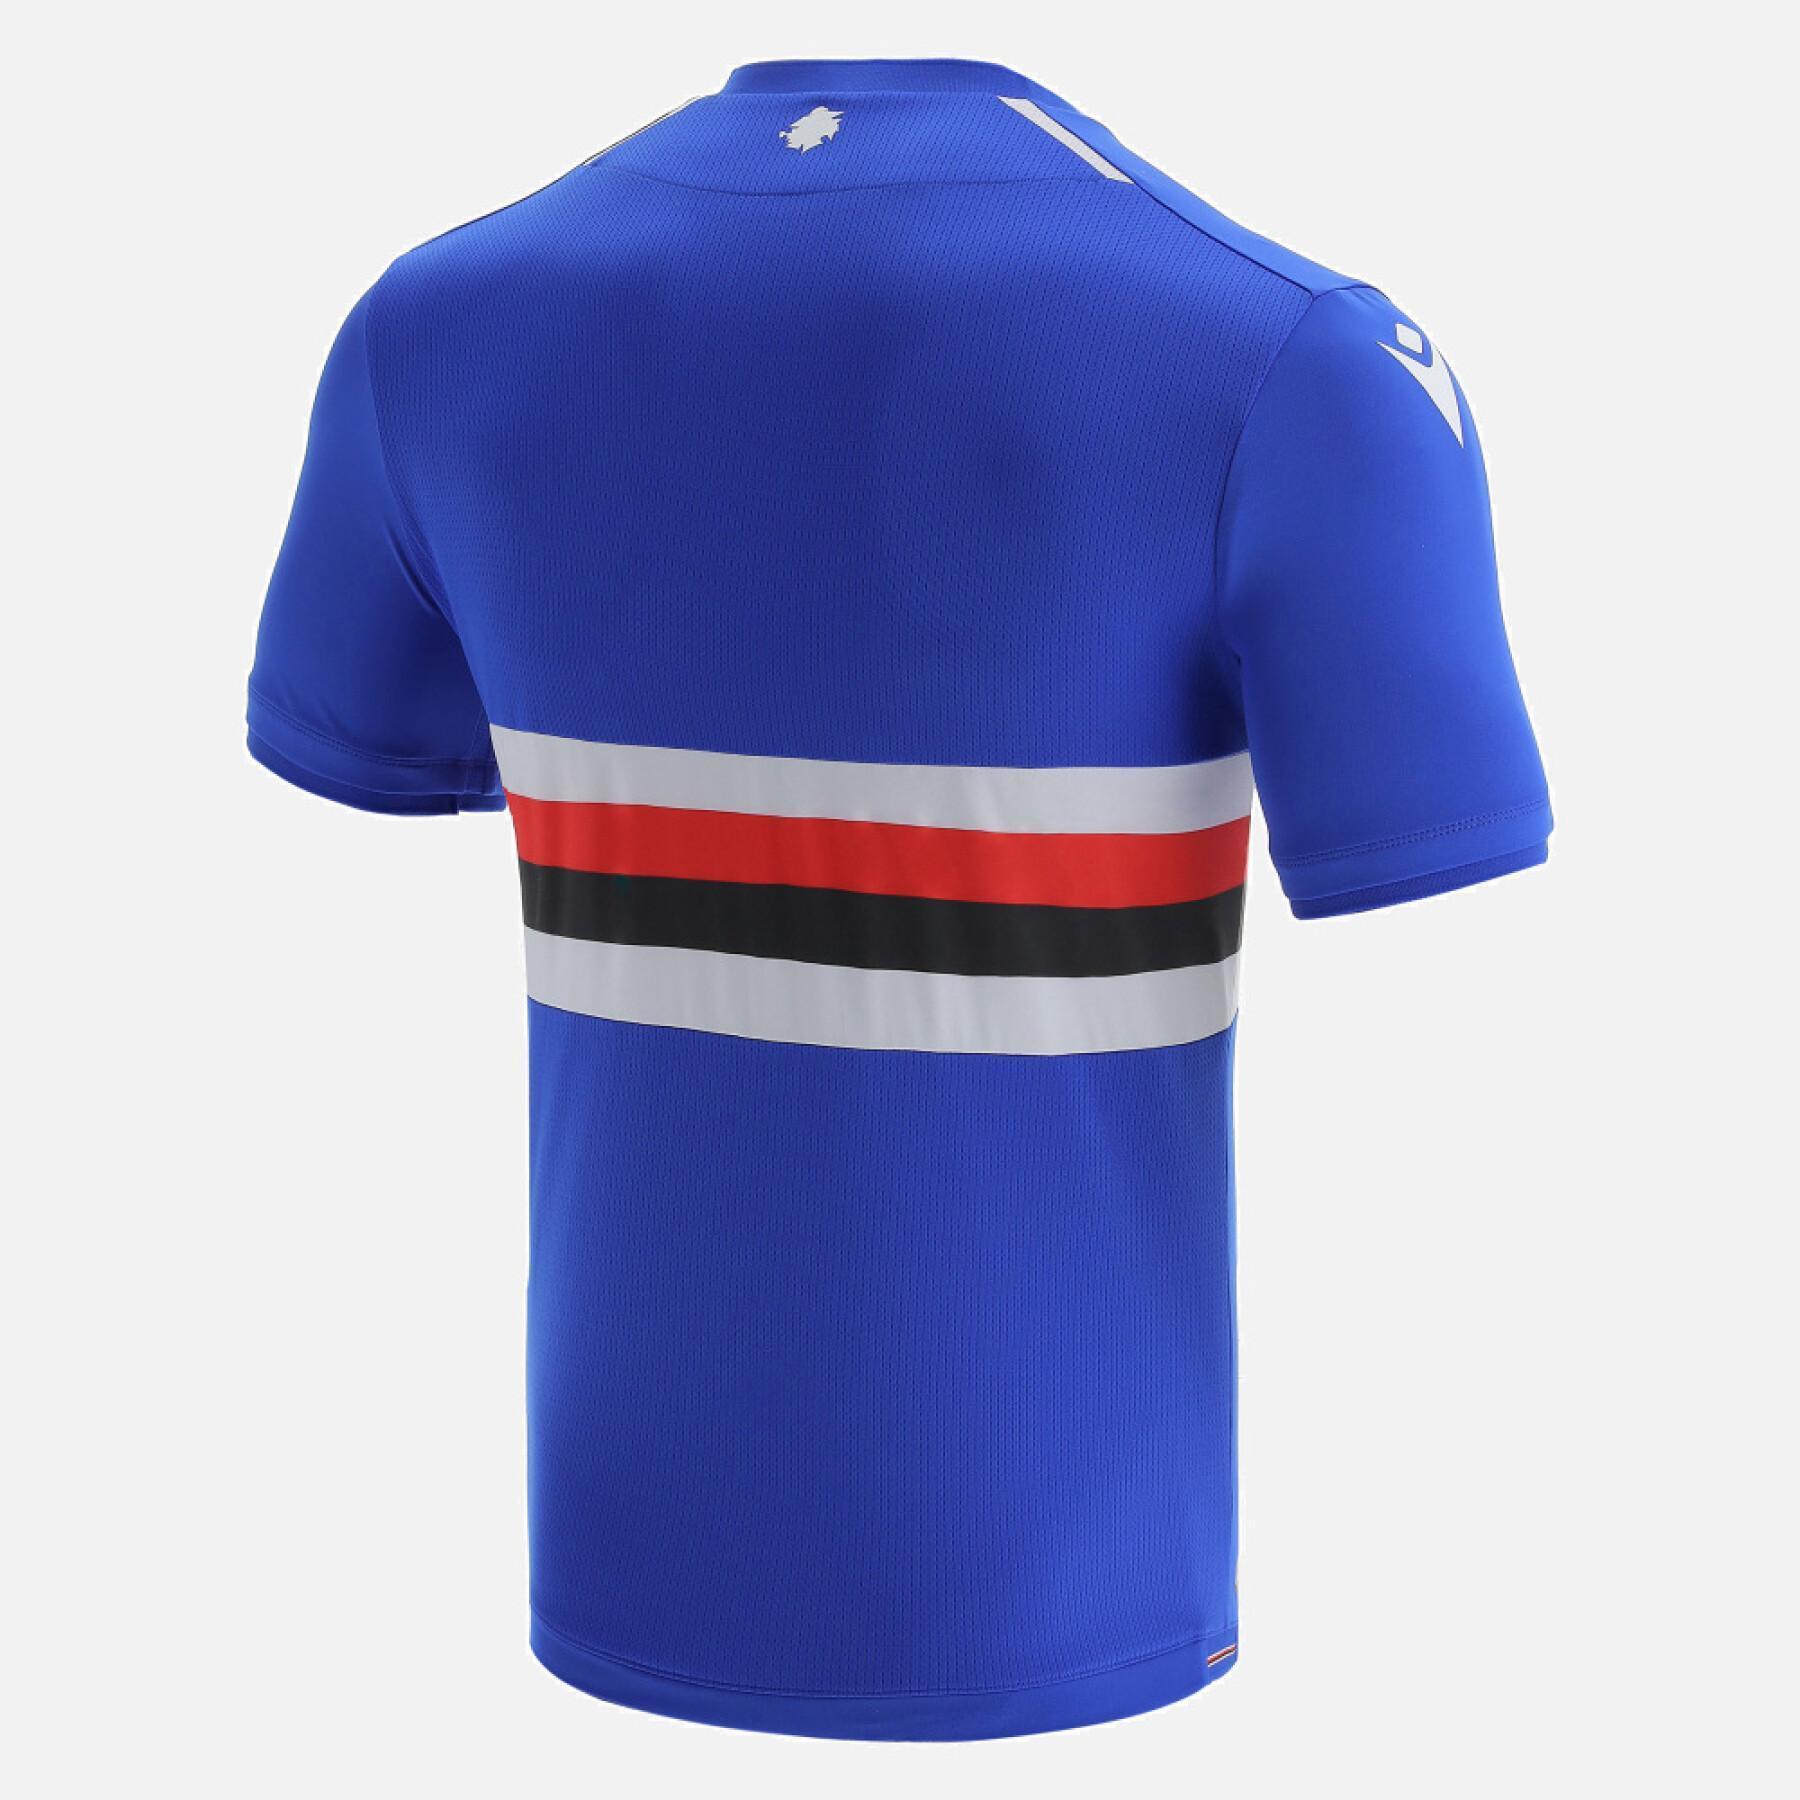 Home jersey UC Sampdoria 2021/22